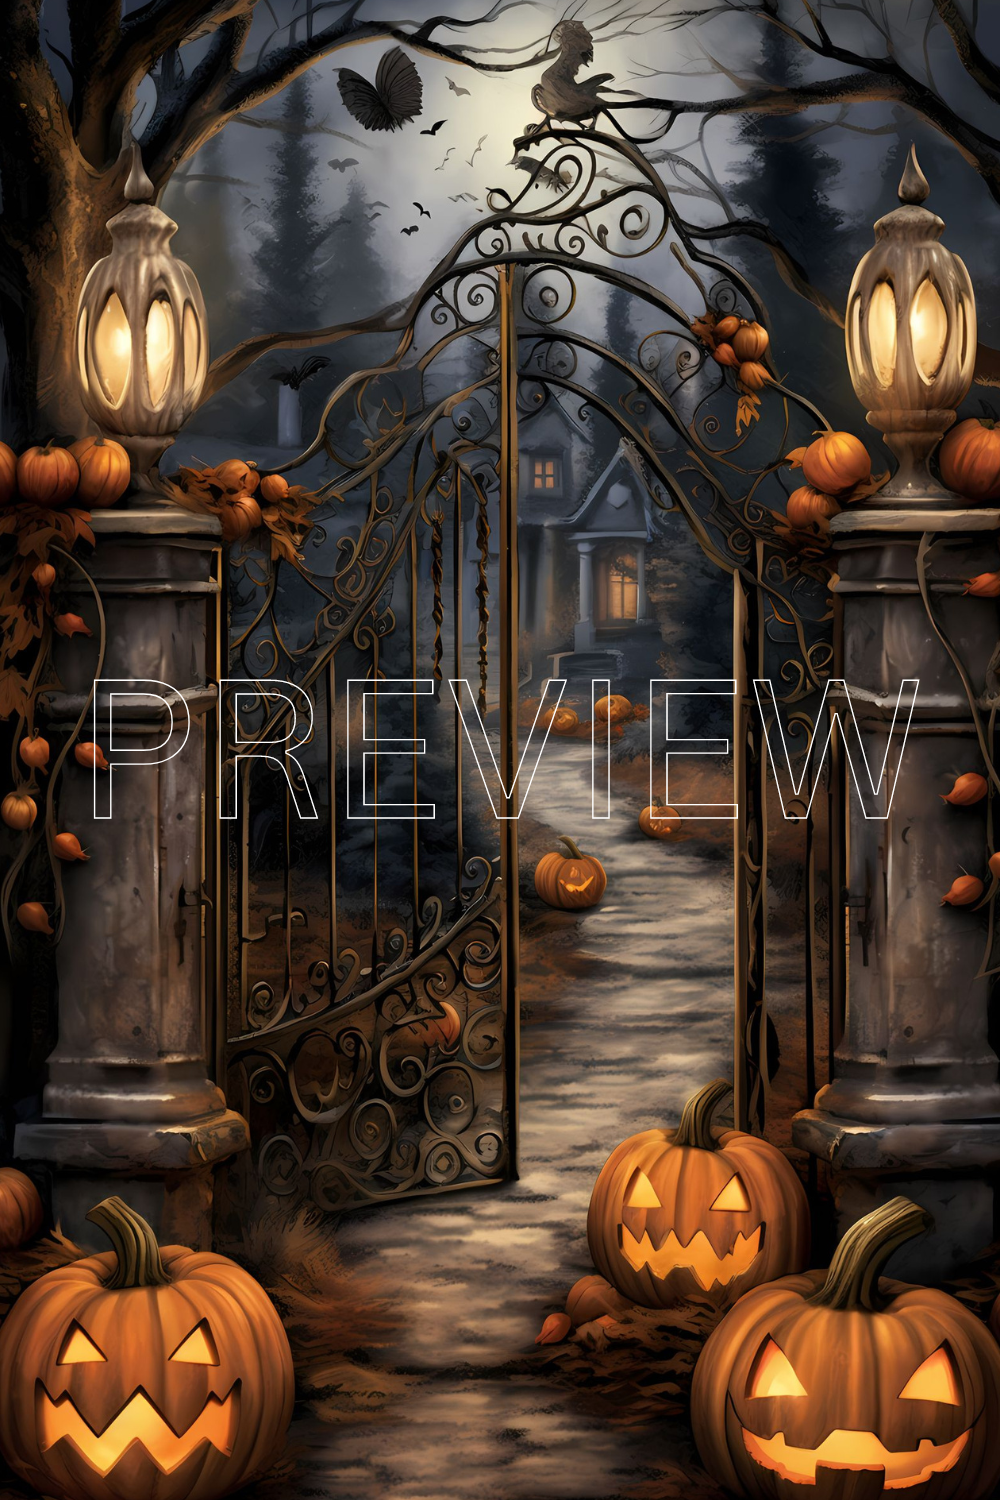 Spooky Halloween - Printable Junk Journal Kit, Journal Cards, ATC Cards, Digital Download